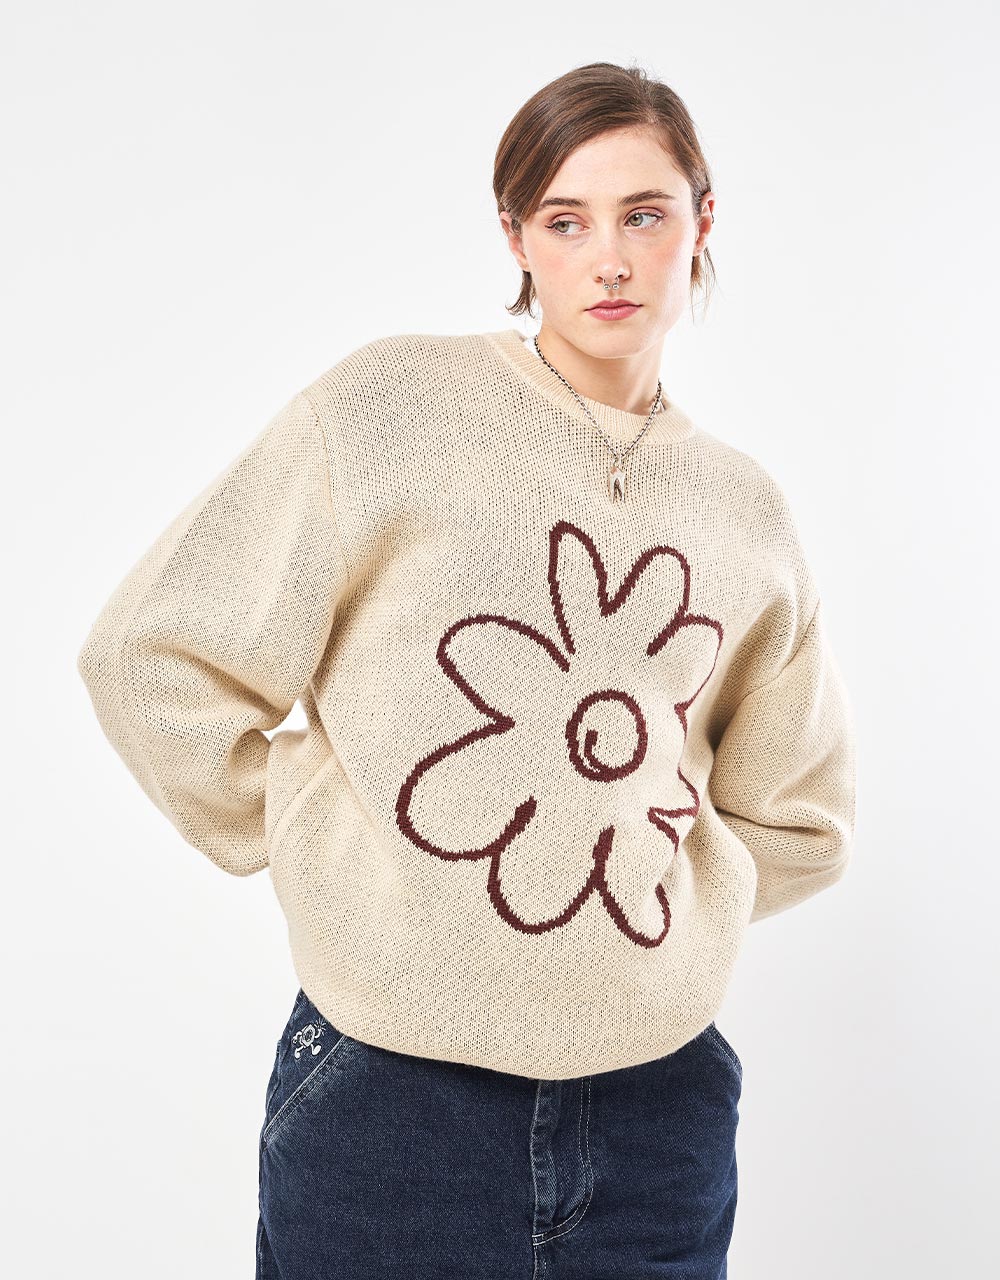 CROCHET flower sweater TUTORIAL - YouTube